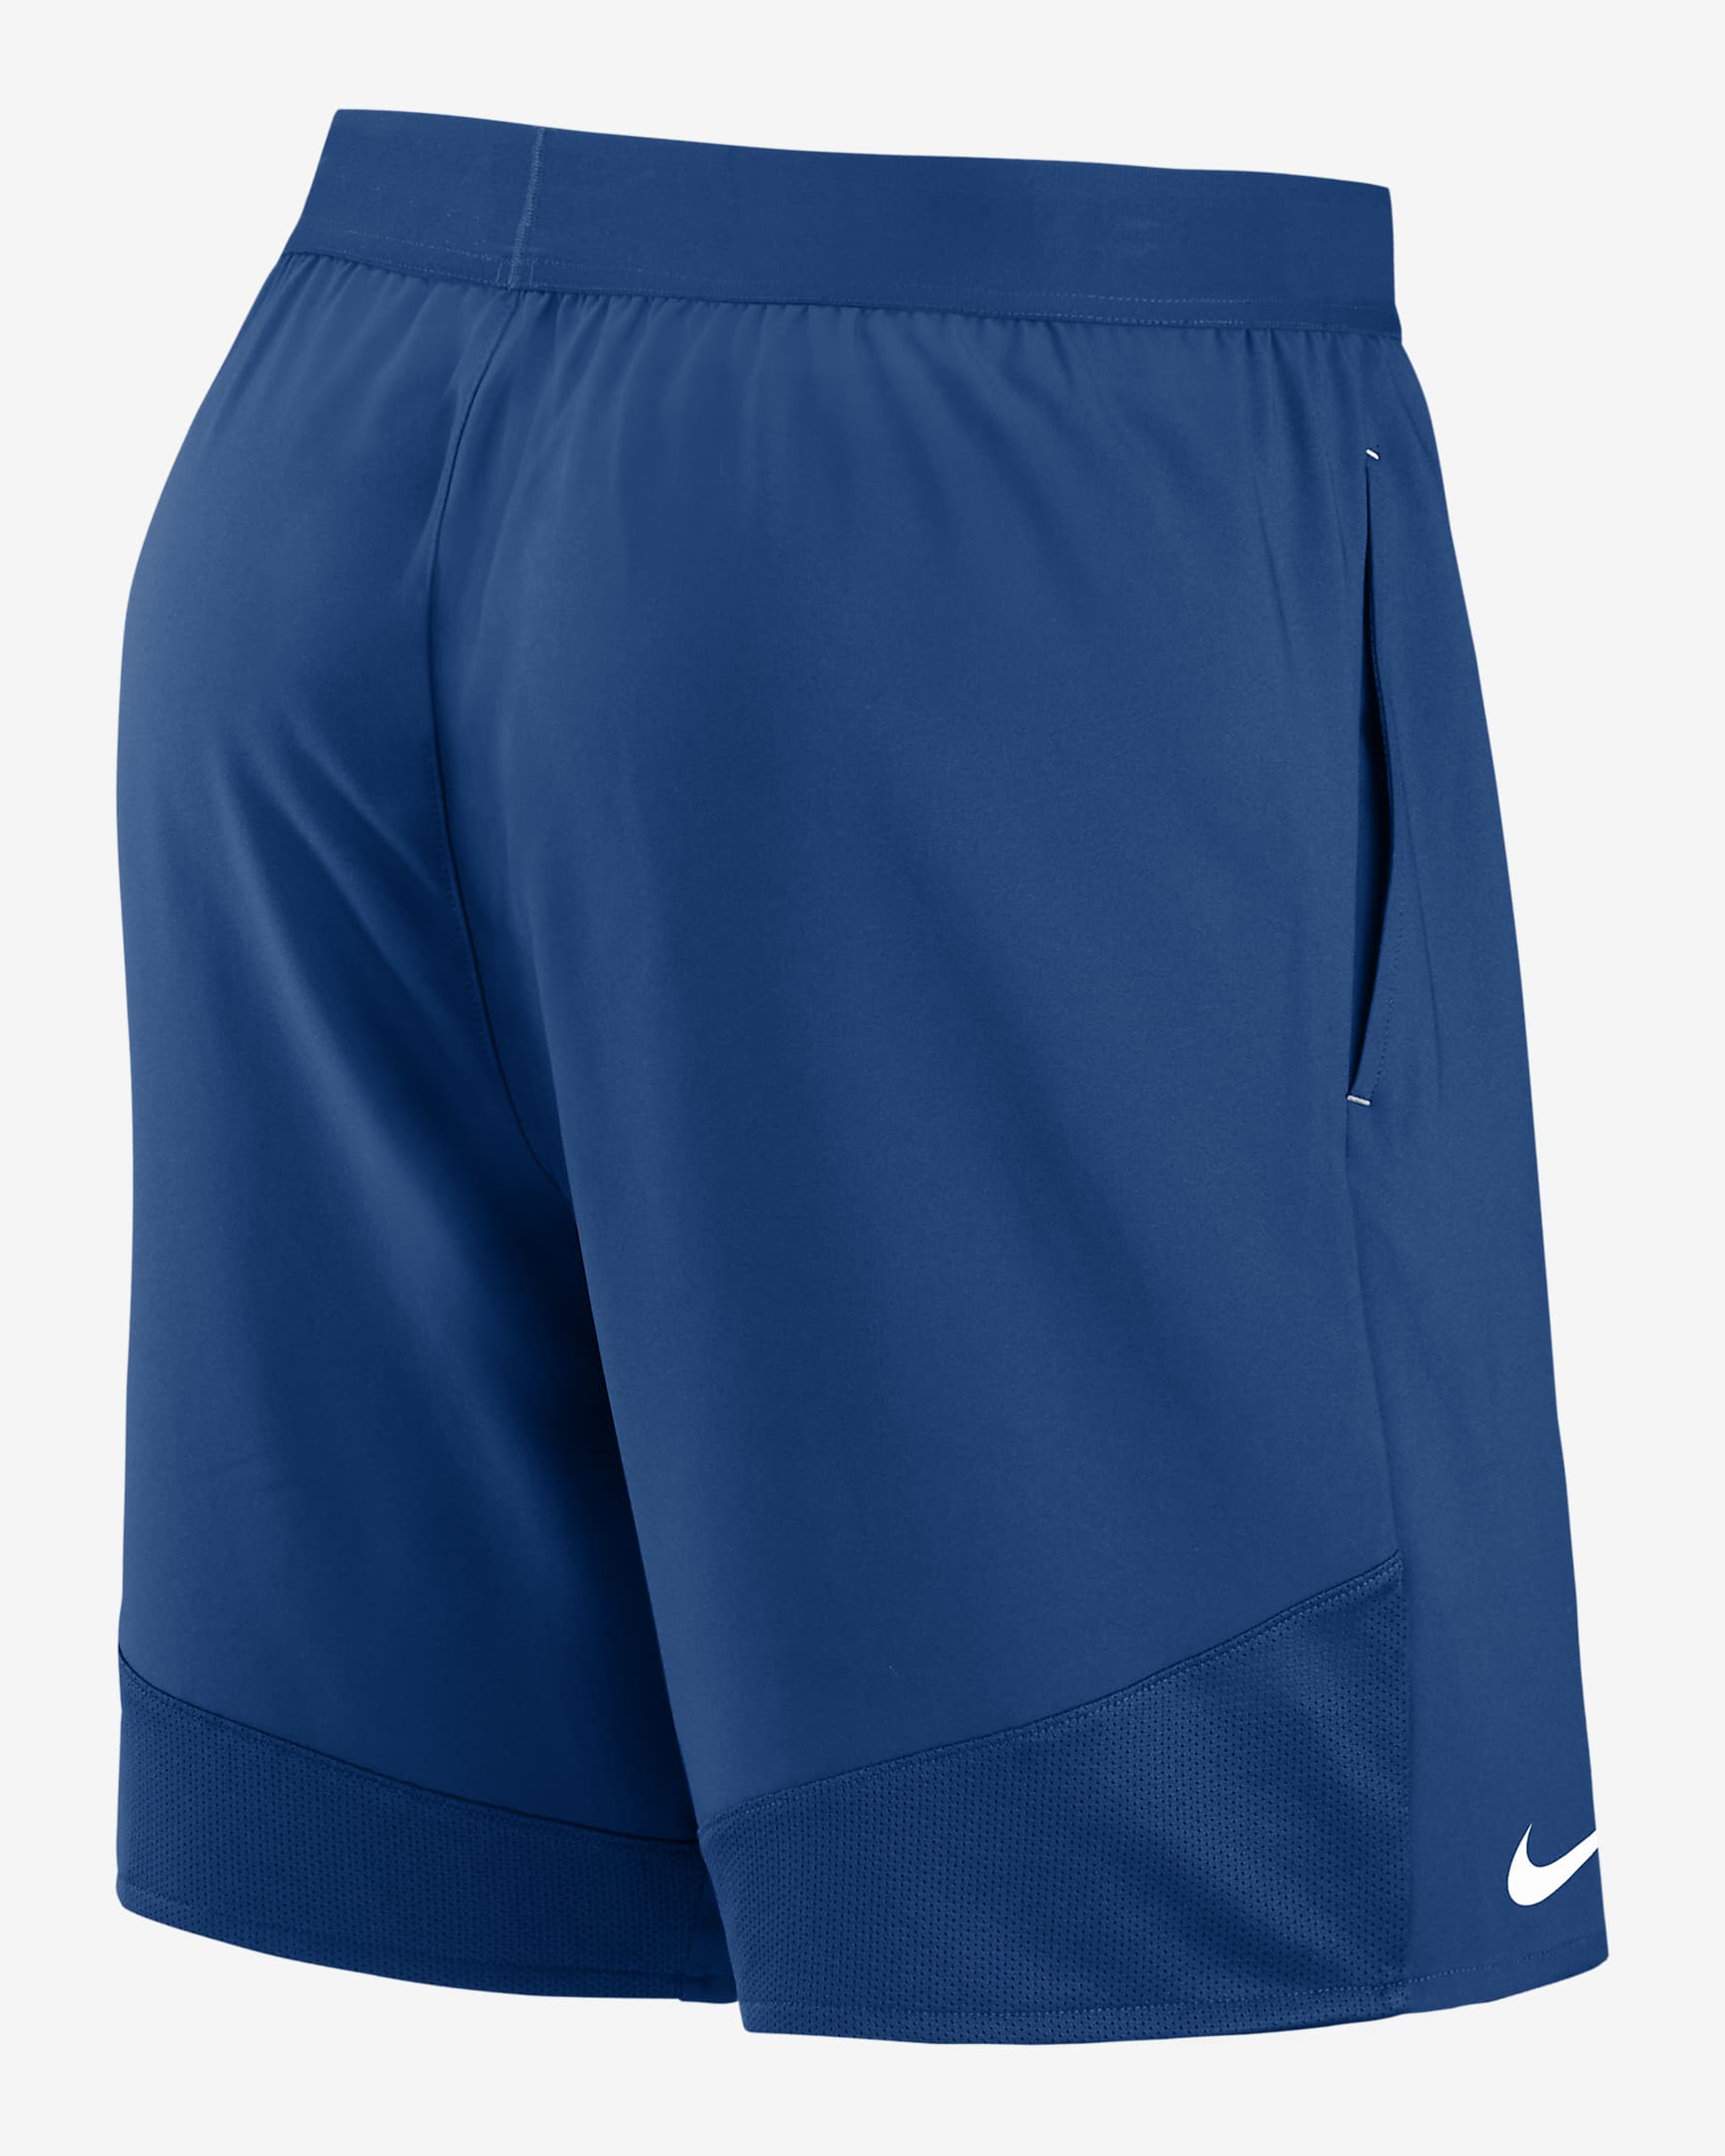 Shorts para hombre Nike Dri-FIT Stretch (NFL Indianapolis Colts). Nike.com